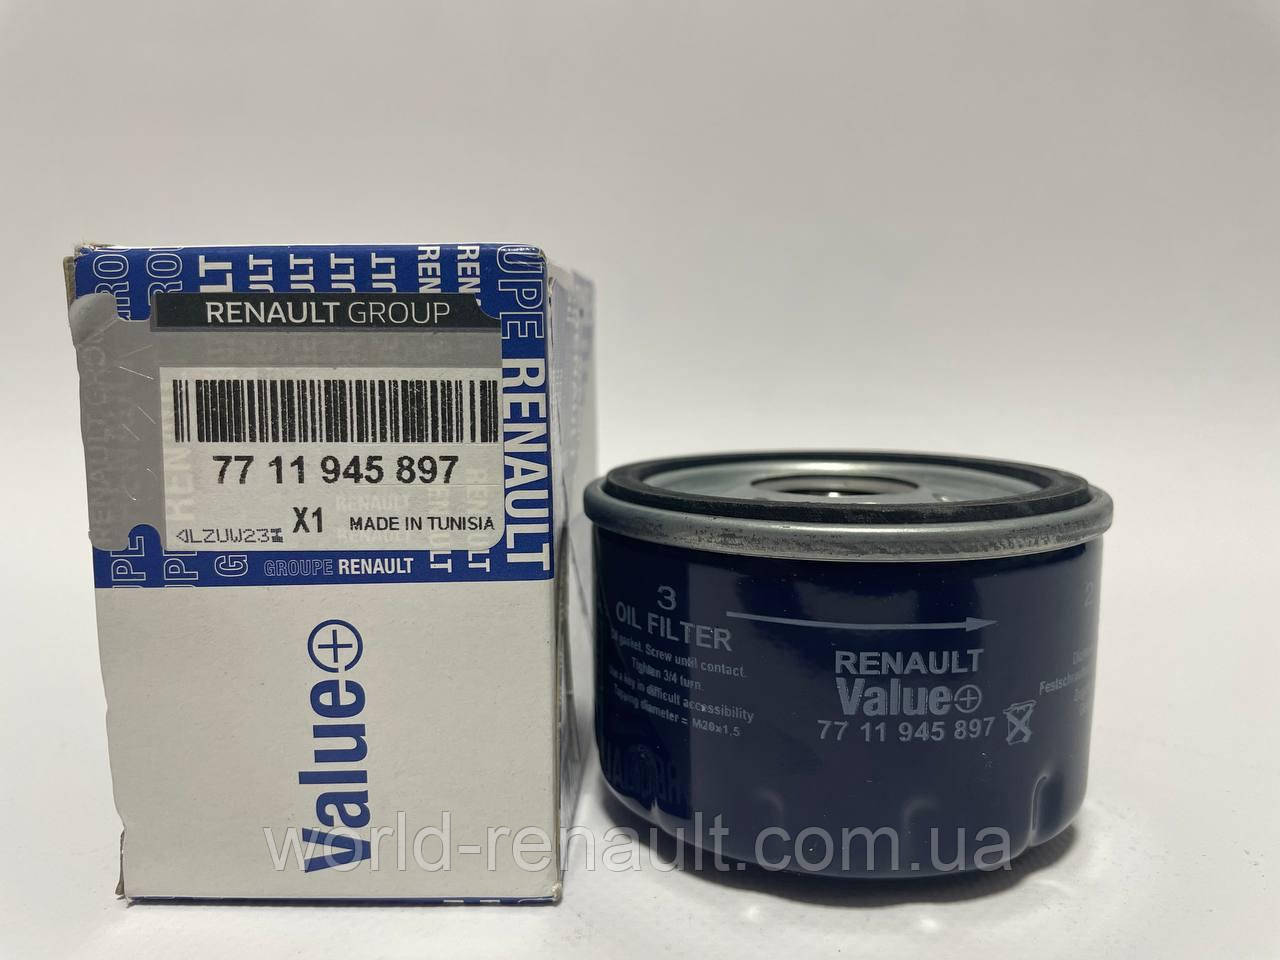 Value + (Renault) 7711945897 — Оливний фільтр на Рено Кангу 1.6i 8V K7M